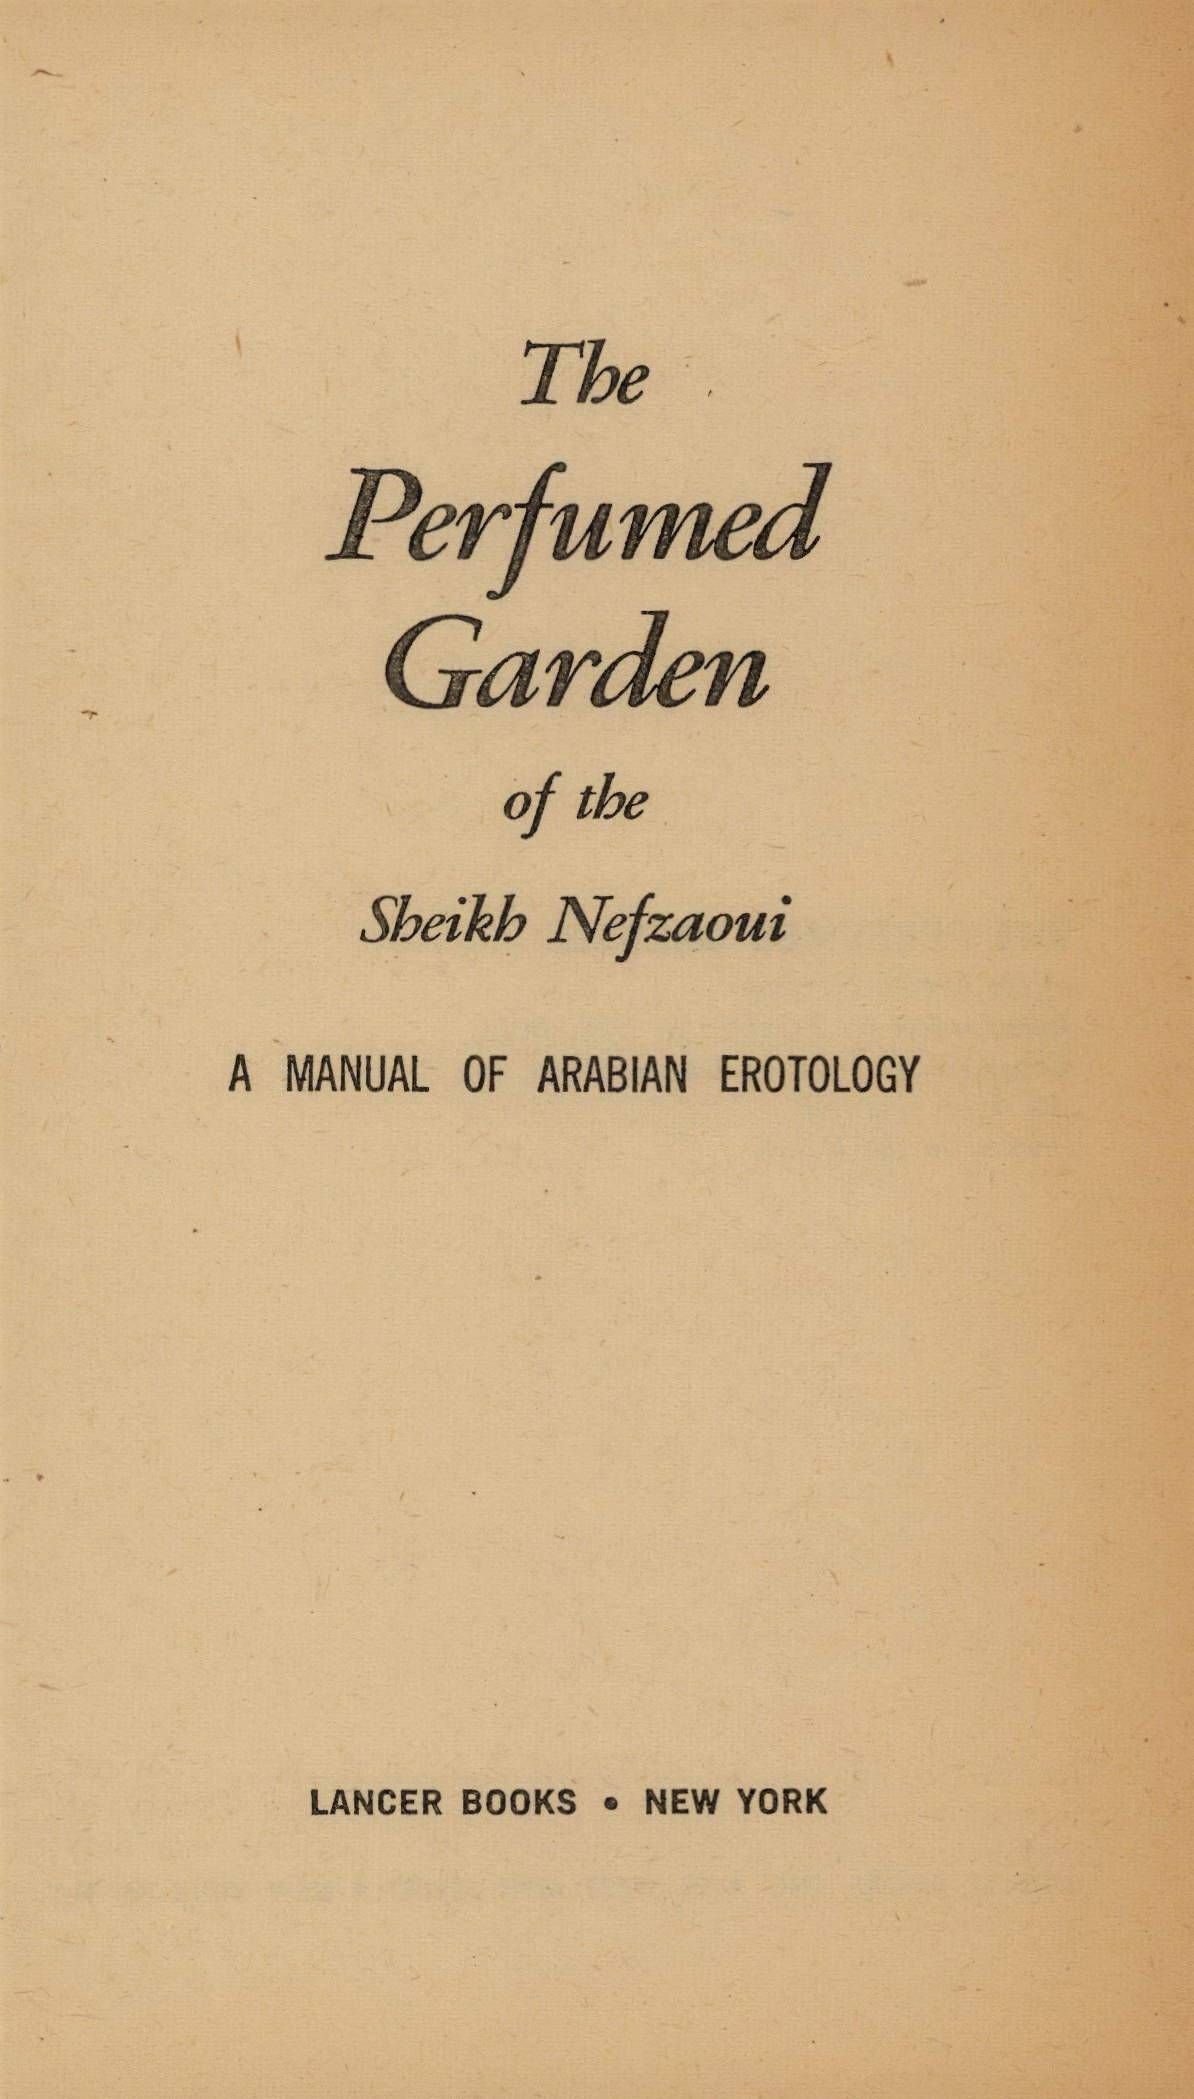 The Perfumed Garden of the Sheikh Nefzaoui 004.jpg